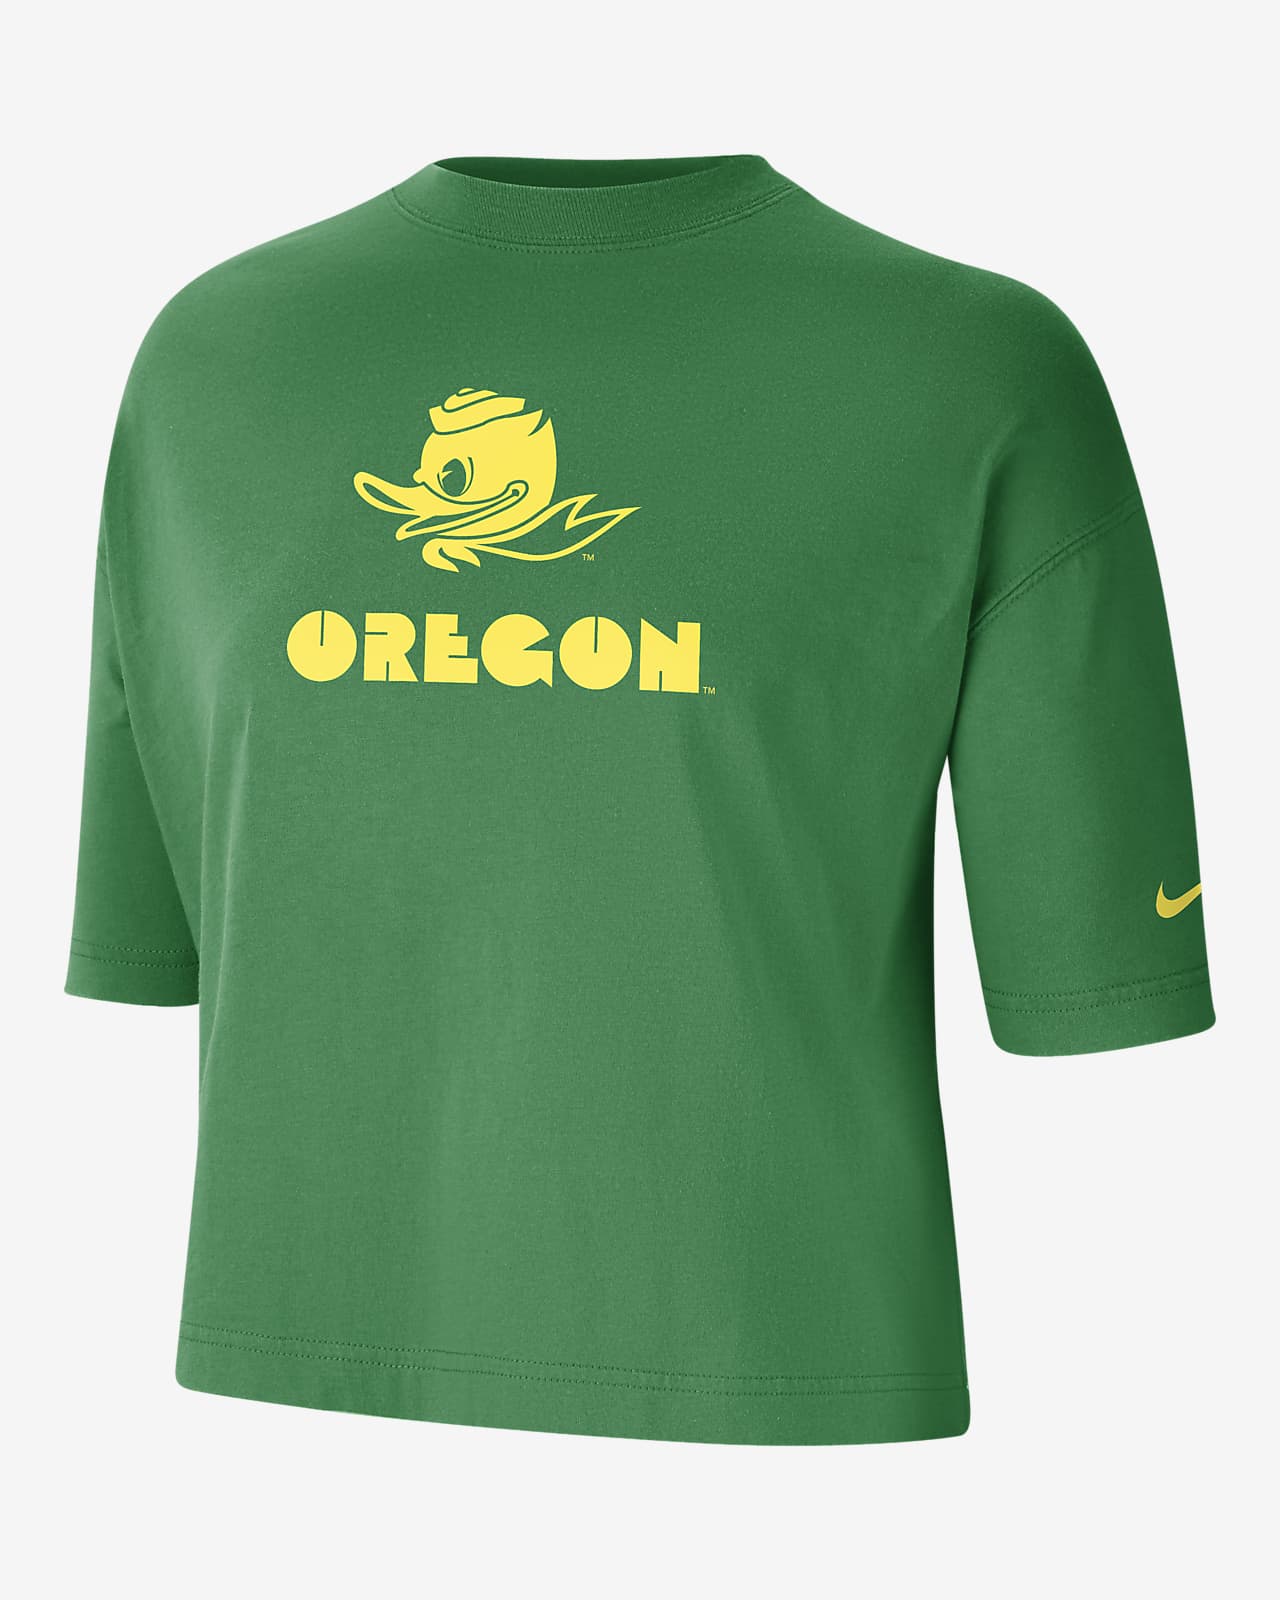 Nike College (Oregon) Women's Cropped T-Shirt